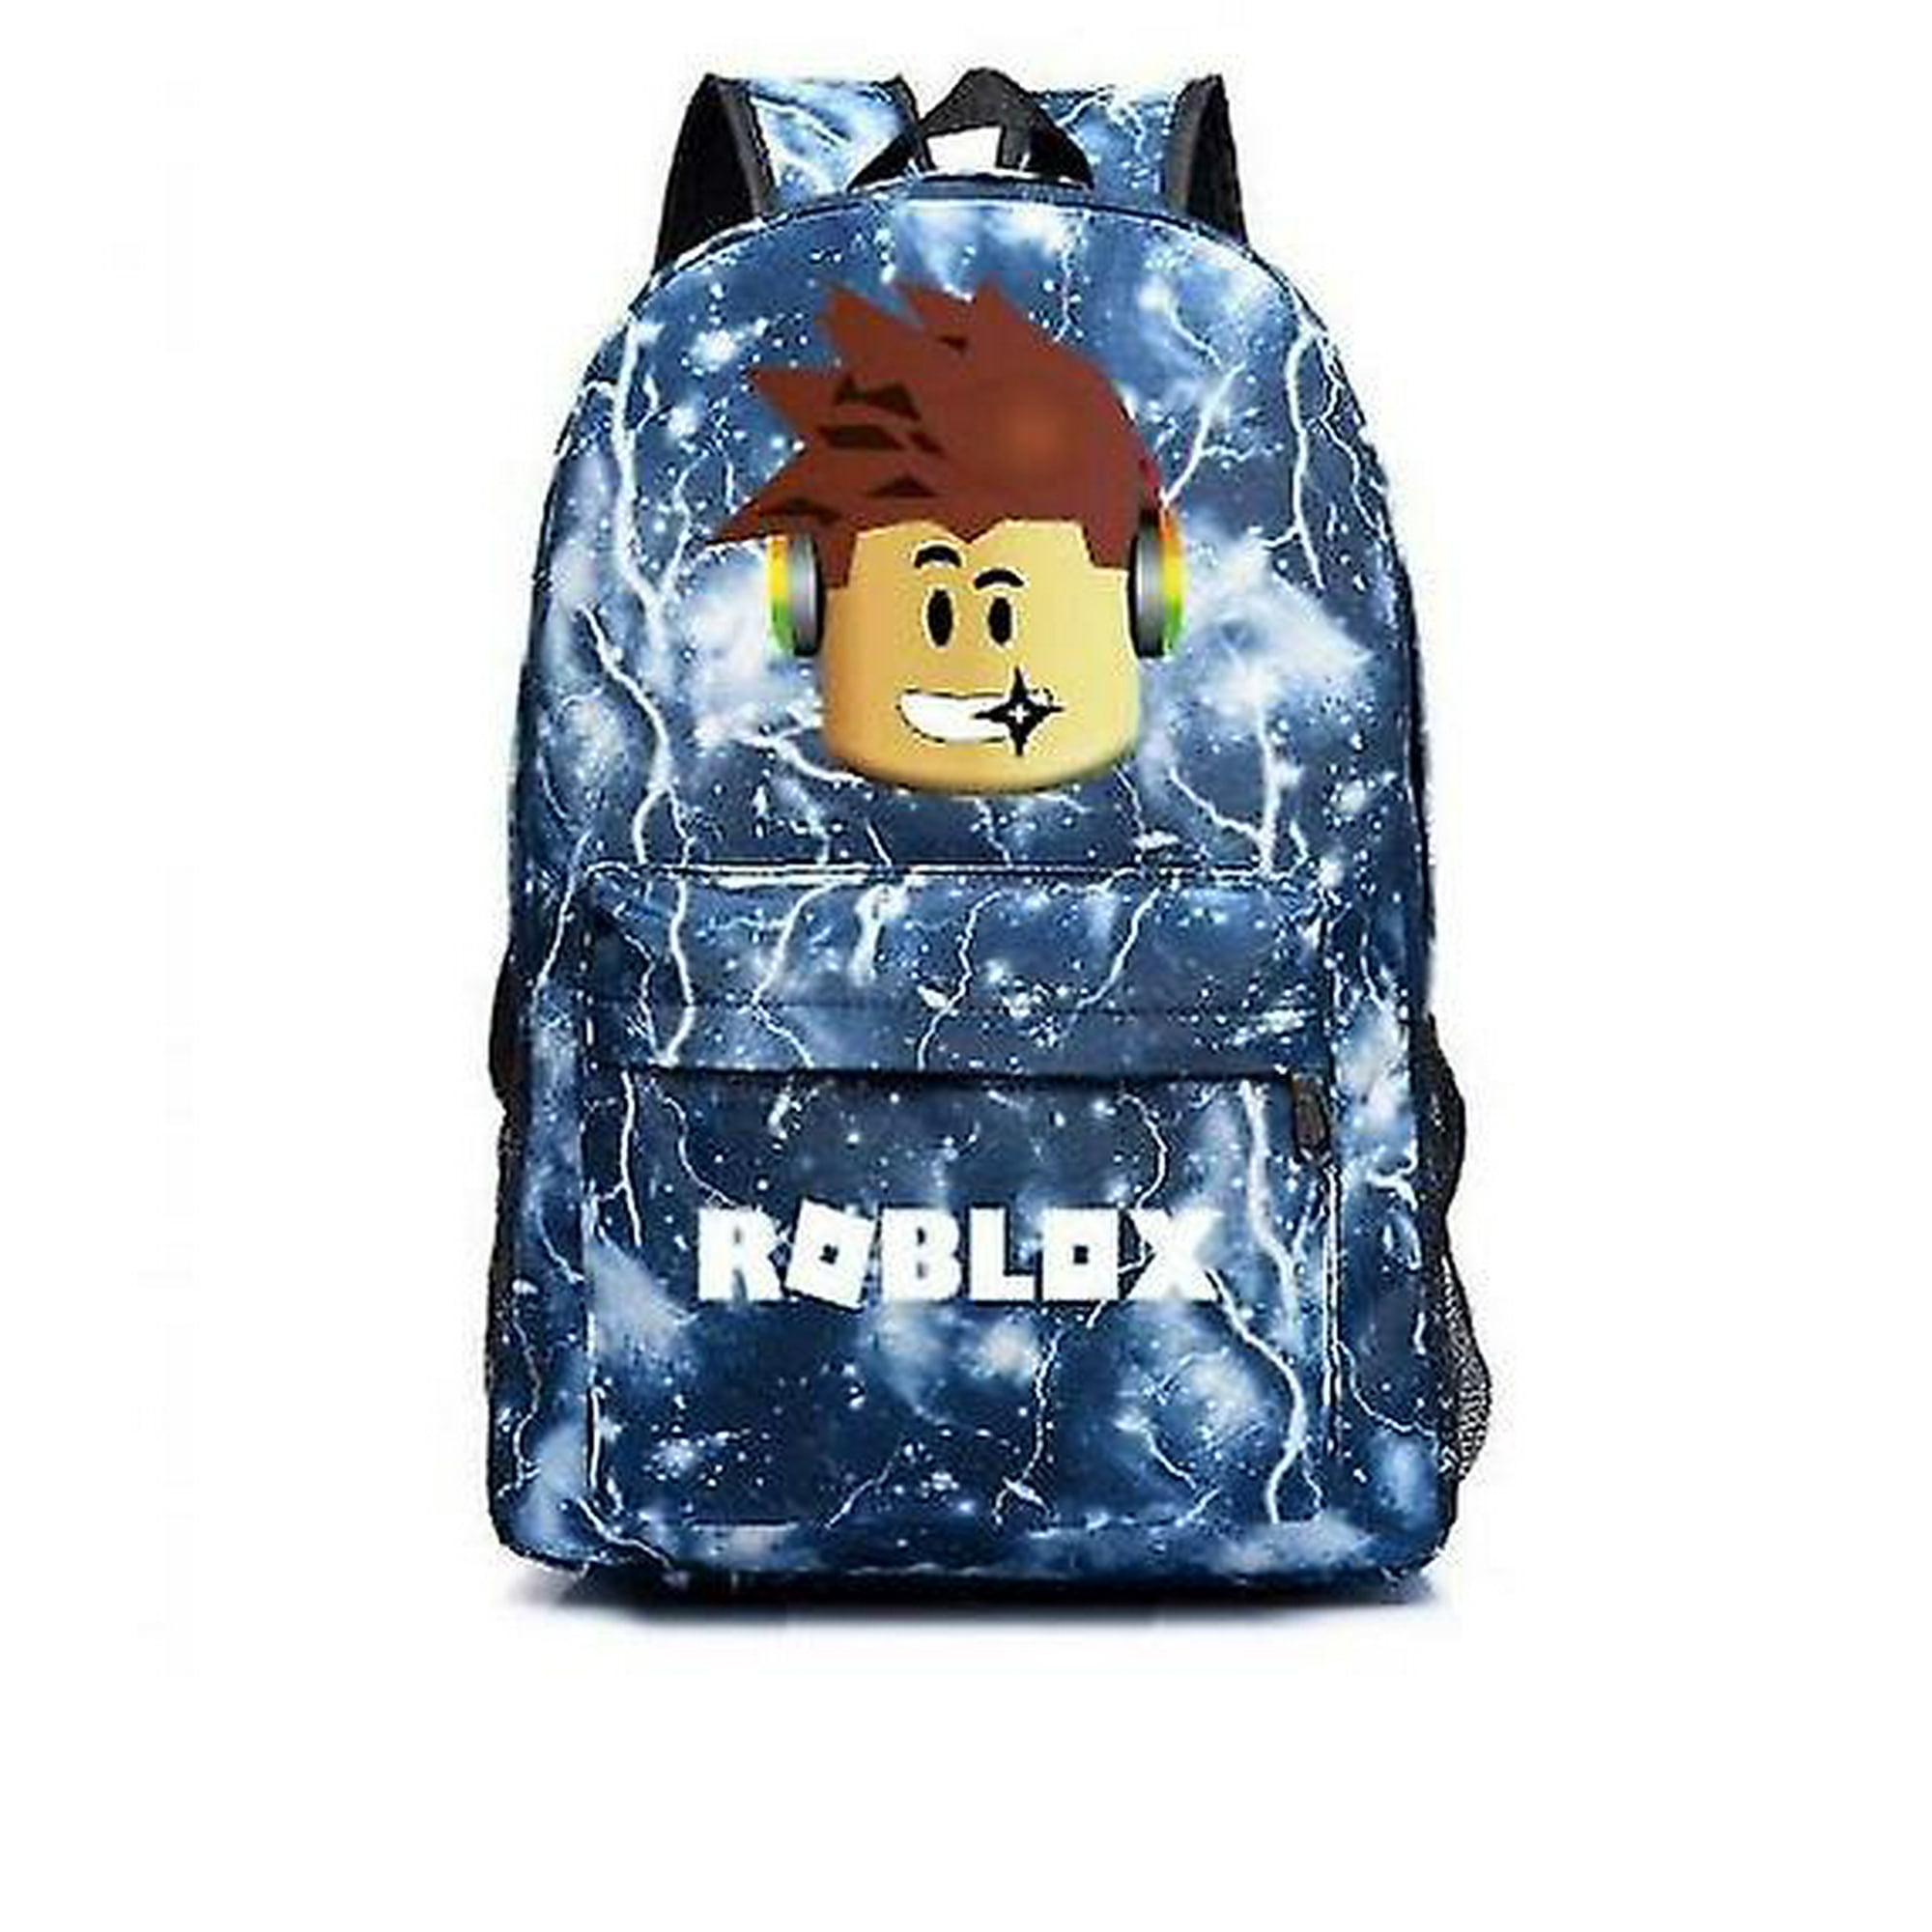 New Roblox Backpack Kids School Bag Students Bookbag Travel Bag Gift |  Walmart Canada